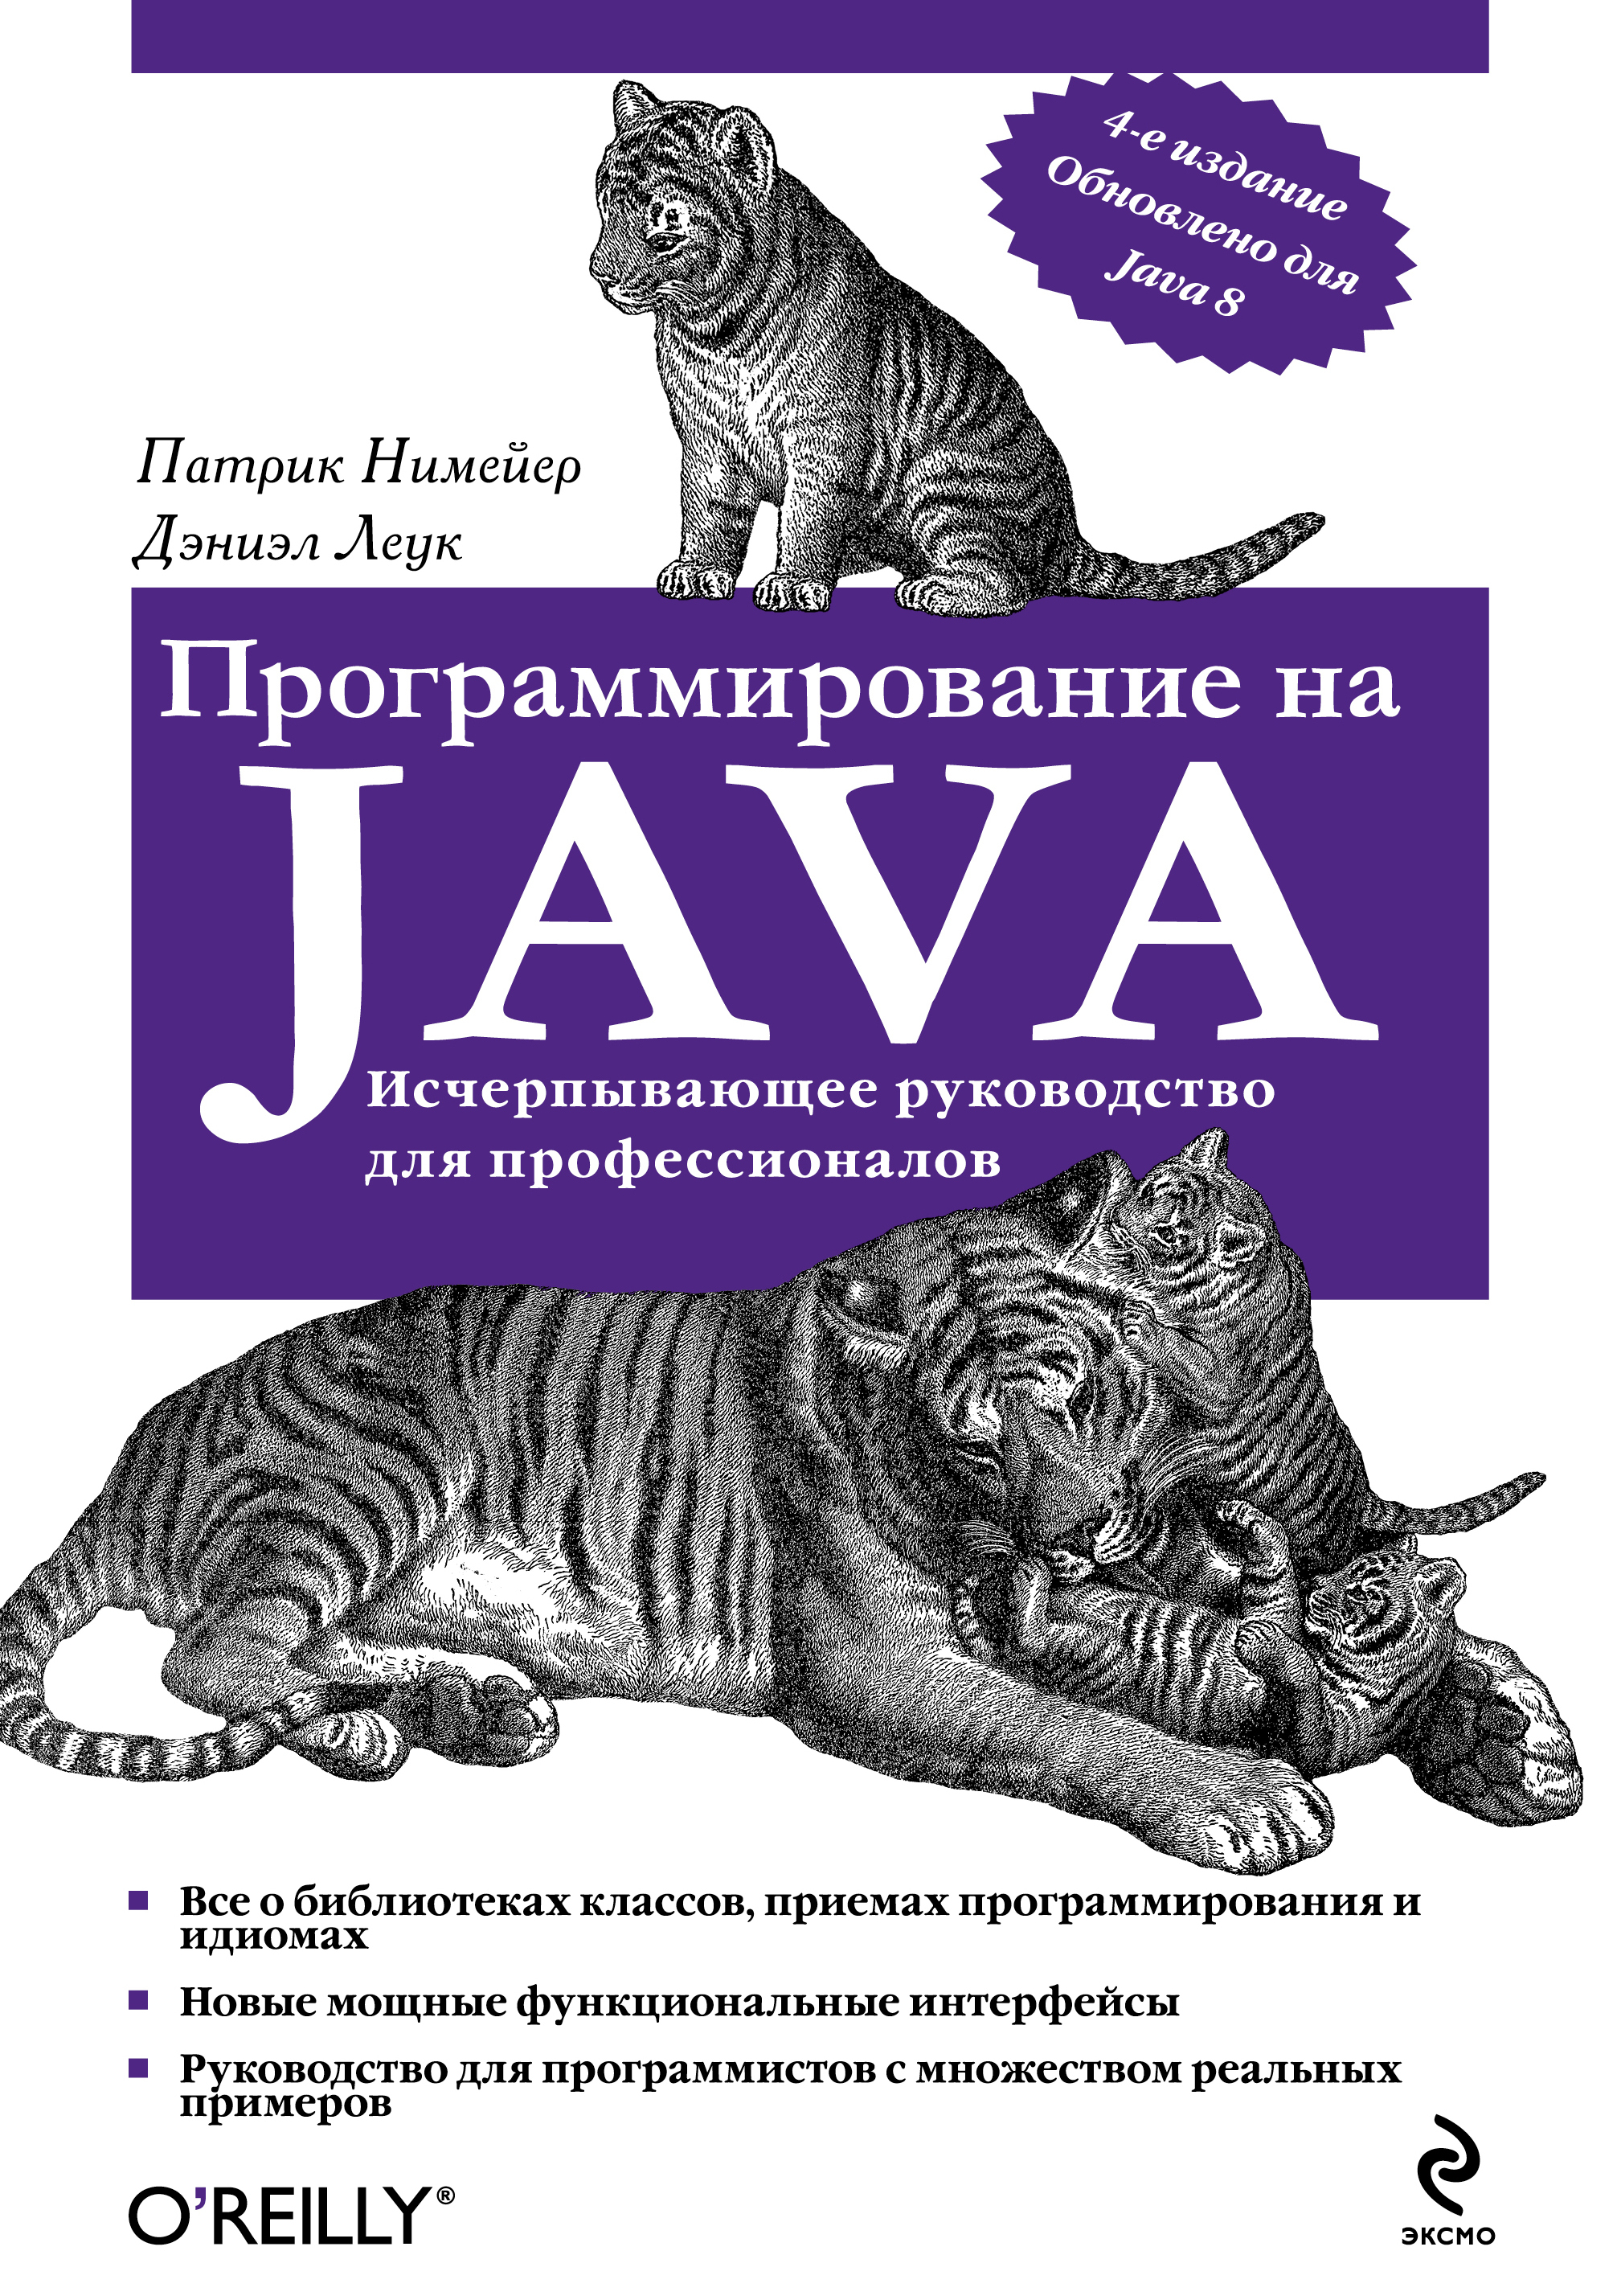 Книги про программирование. Книги по программироваги. Книги по программированию. Программирование на java книга.